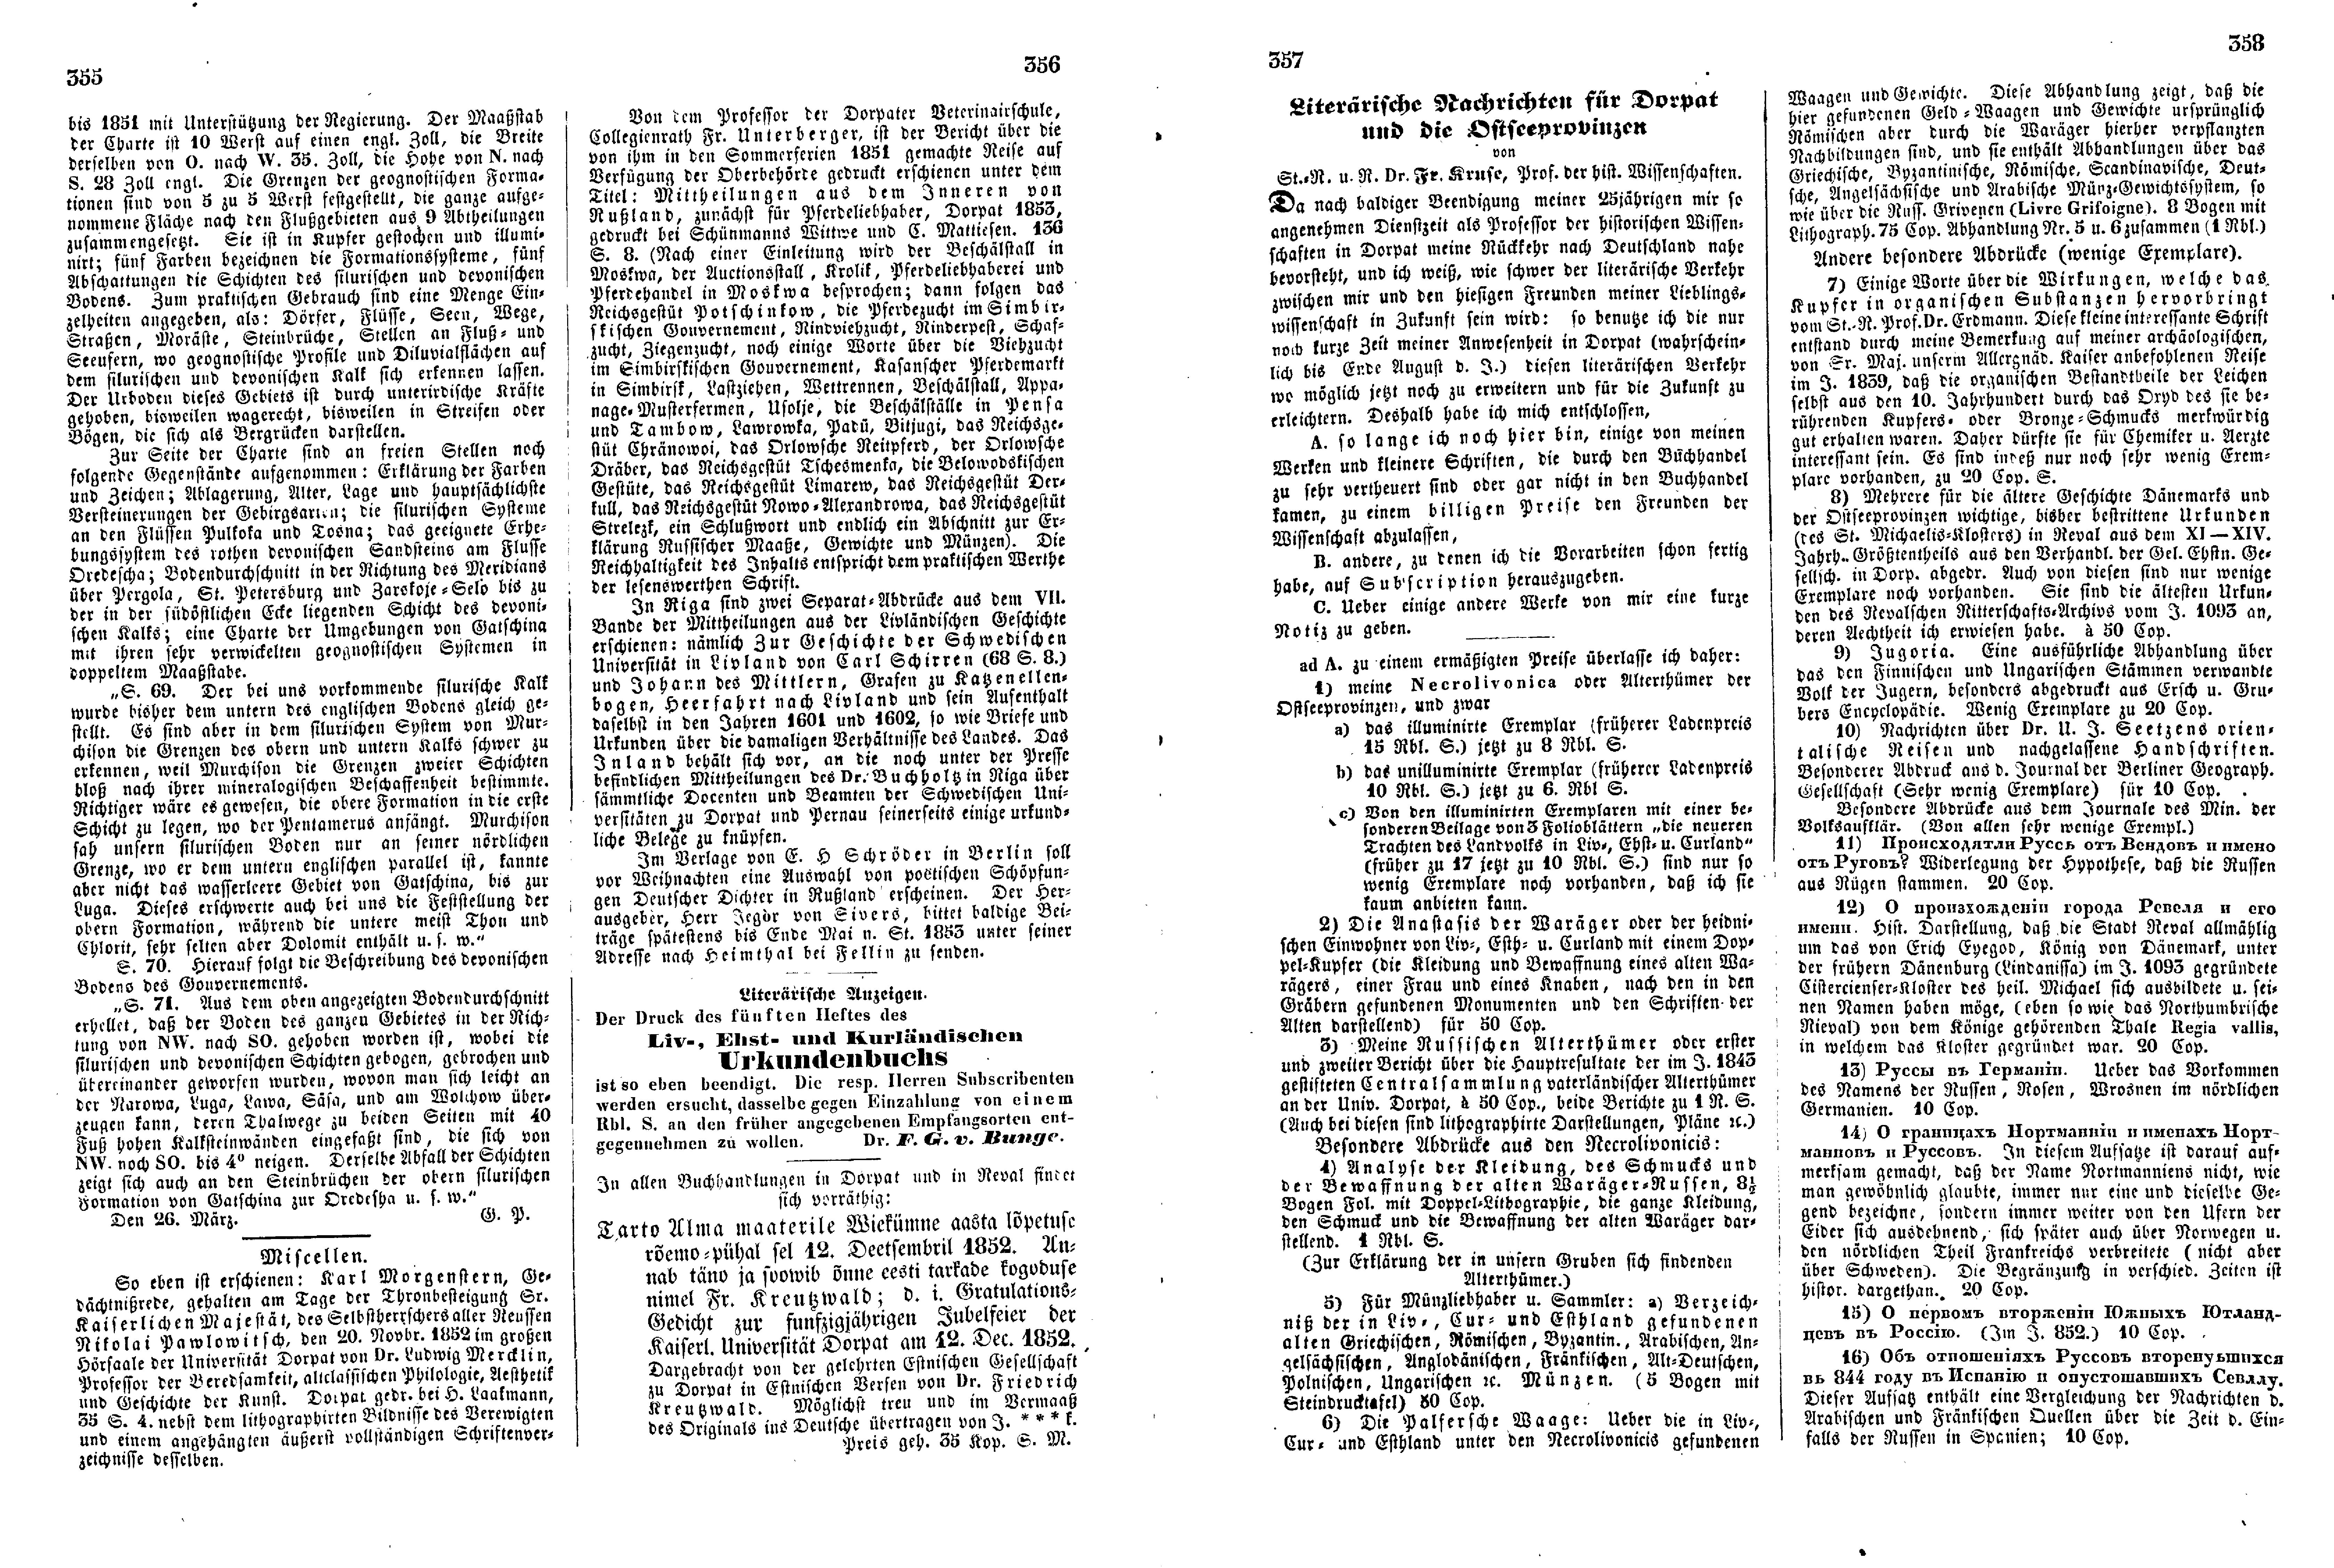 Das Inland [18] (1853) | 99. (355-358) Main body of text